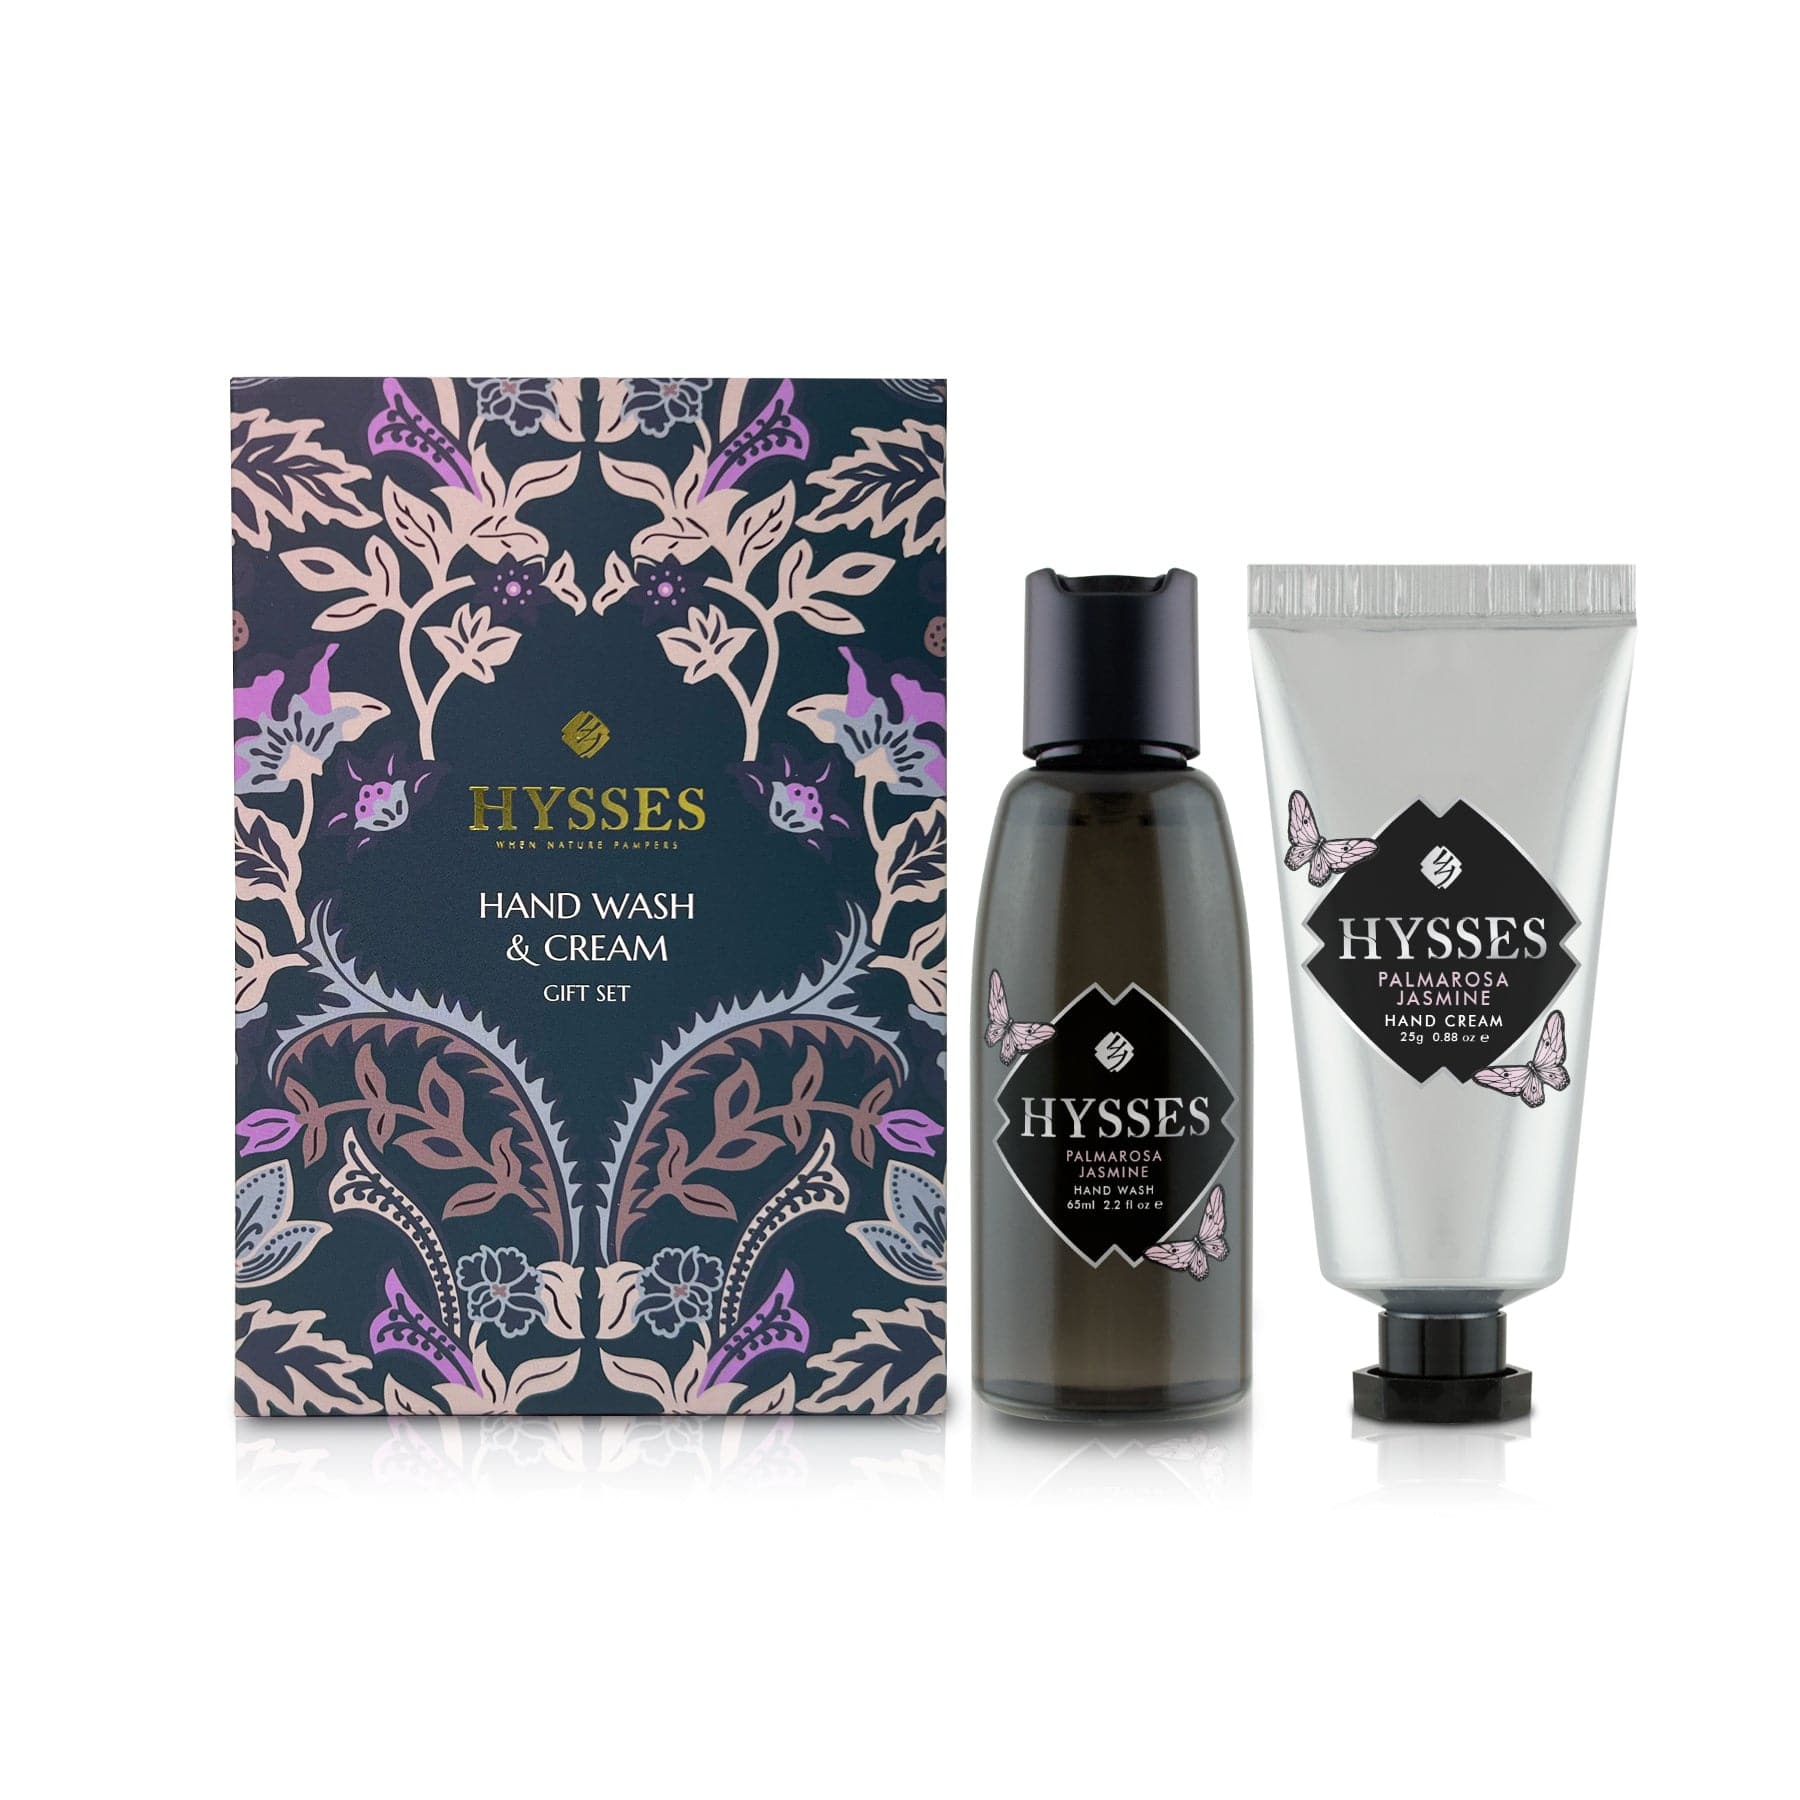 Hysses Body Care Palmarosa Jasmine Travel Gift Set (Hand Wash & Hand Cream), Palmarosa Jasmine